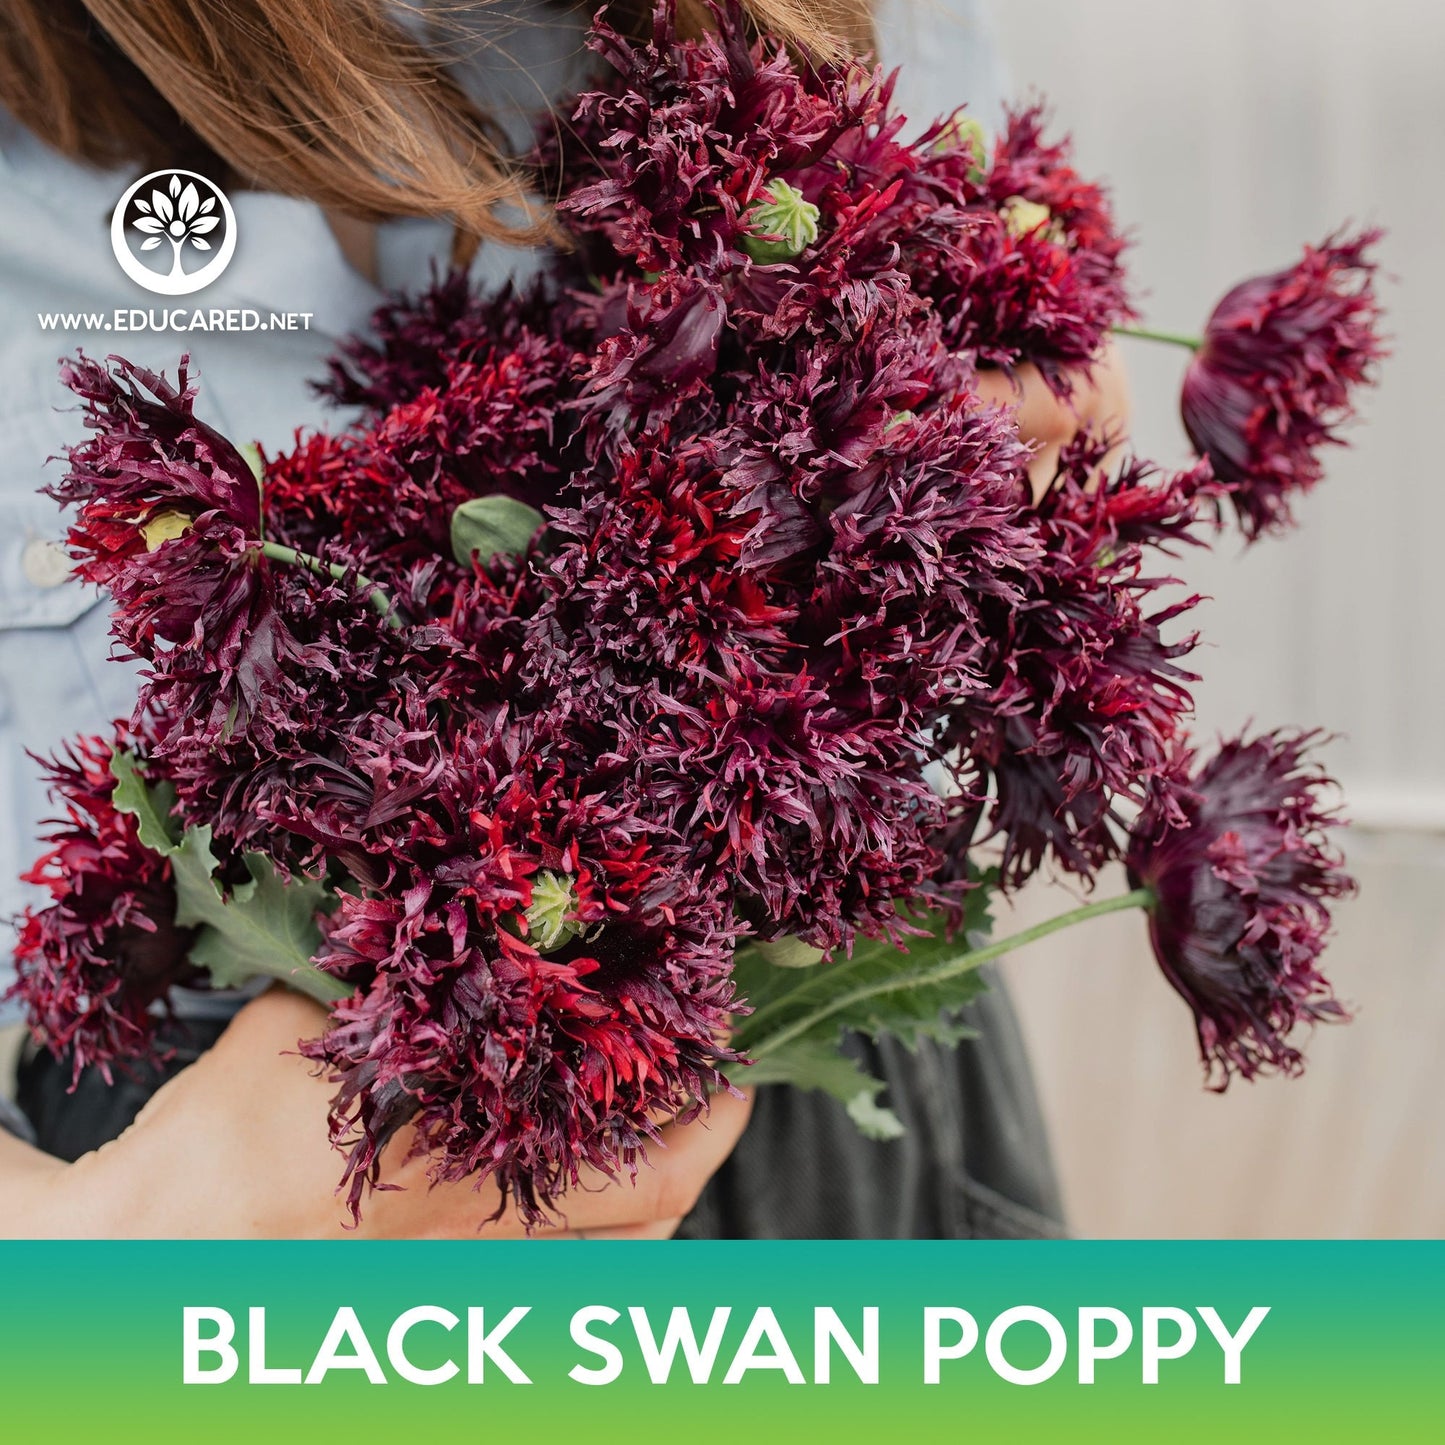 Black Swan Poppy Seeds